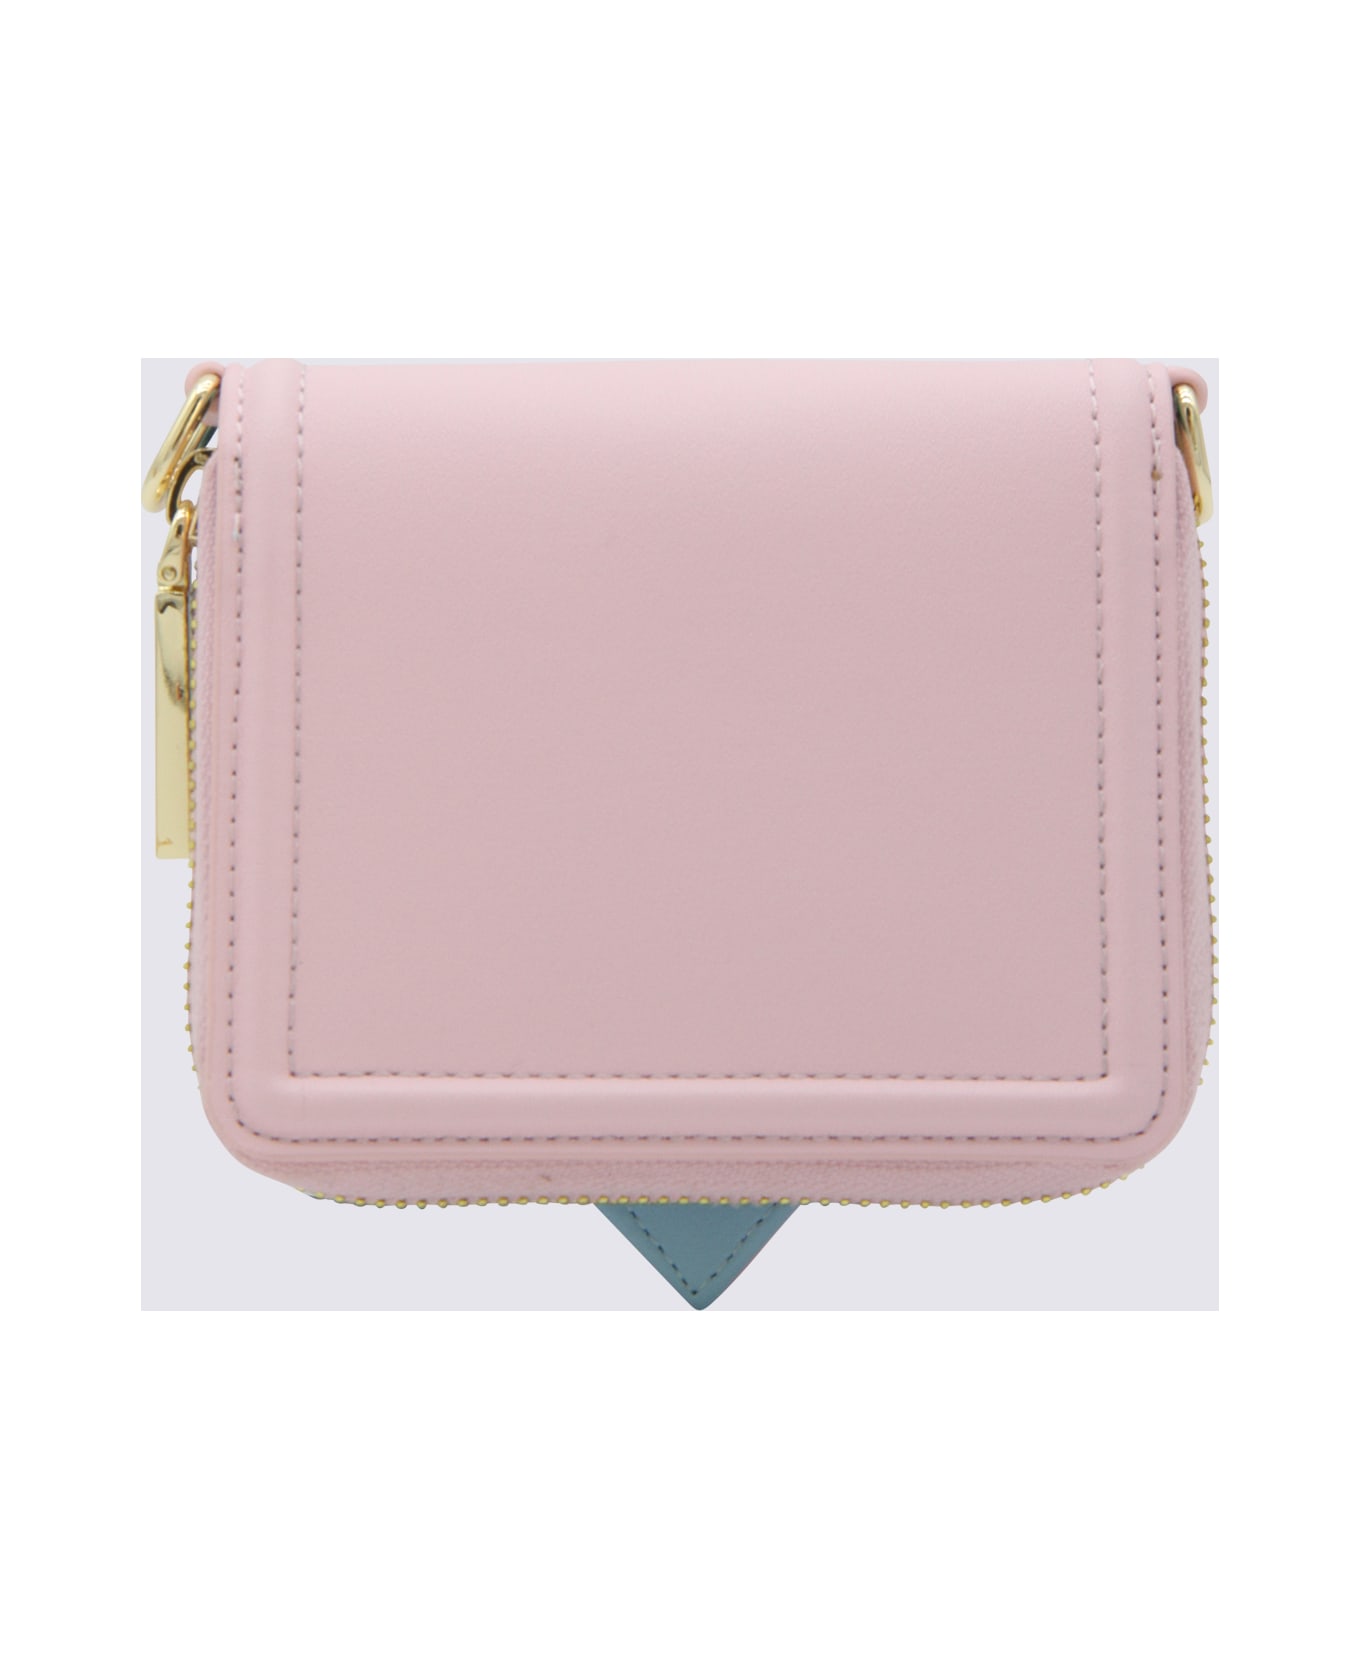 Chiara Ferragni Pink Crossbody Bag - FAIRY TALE